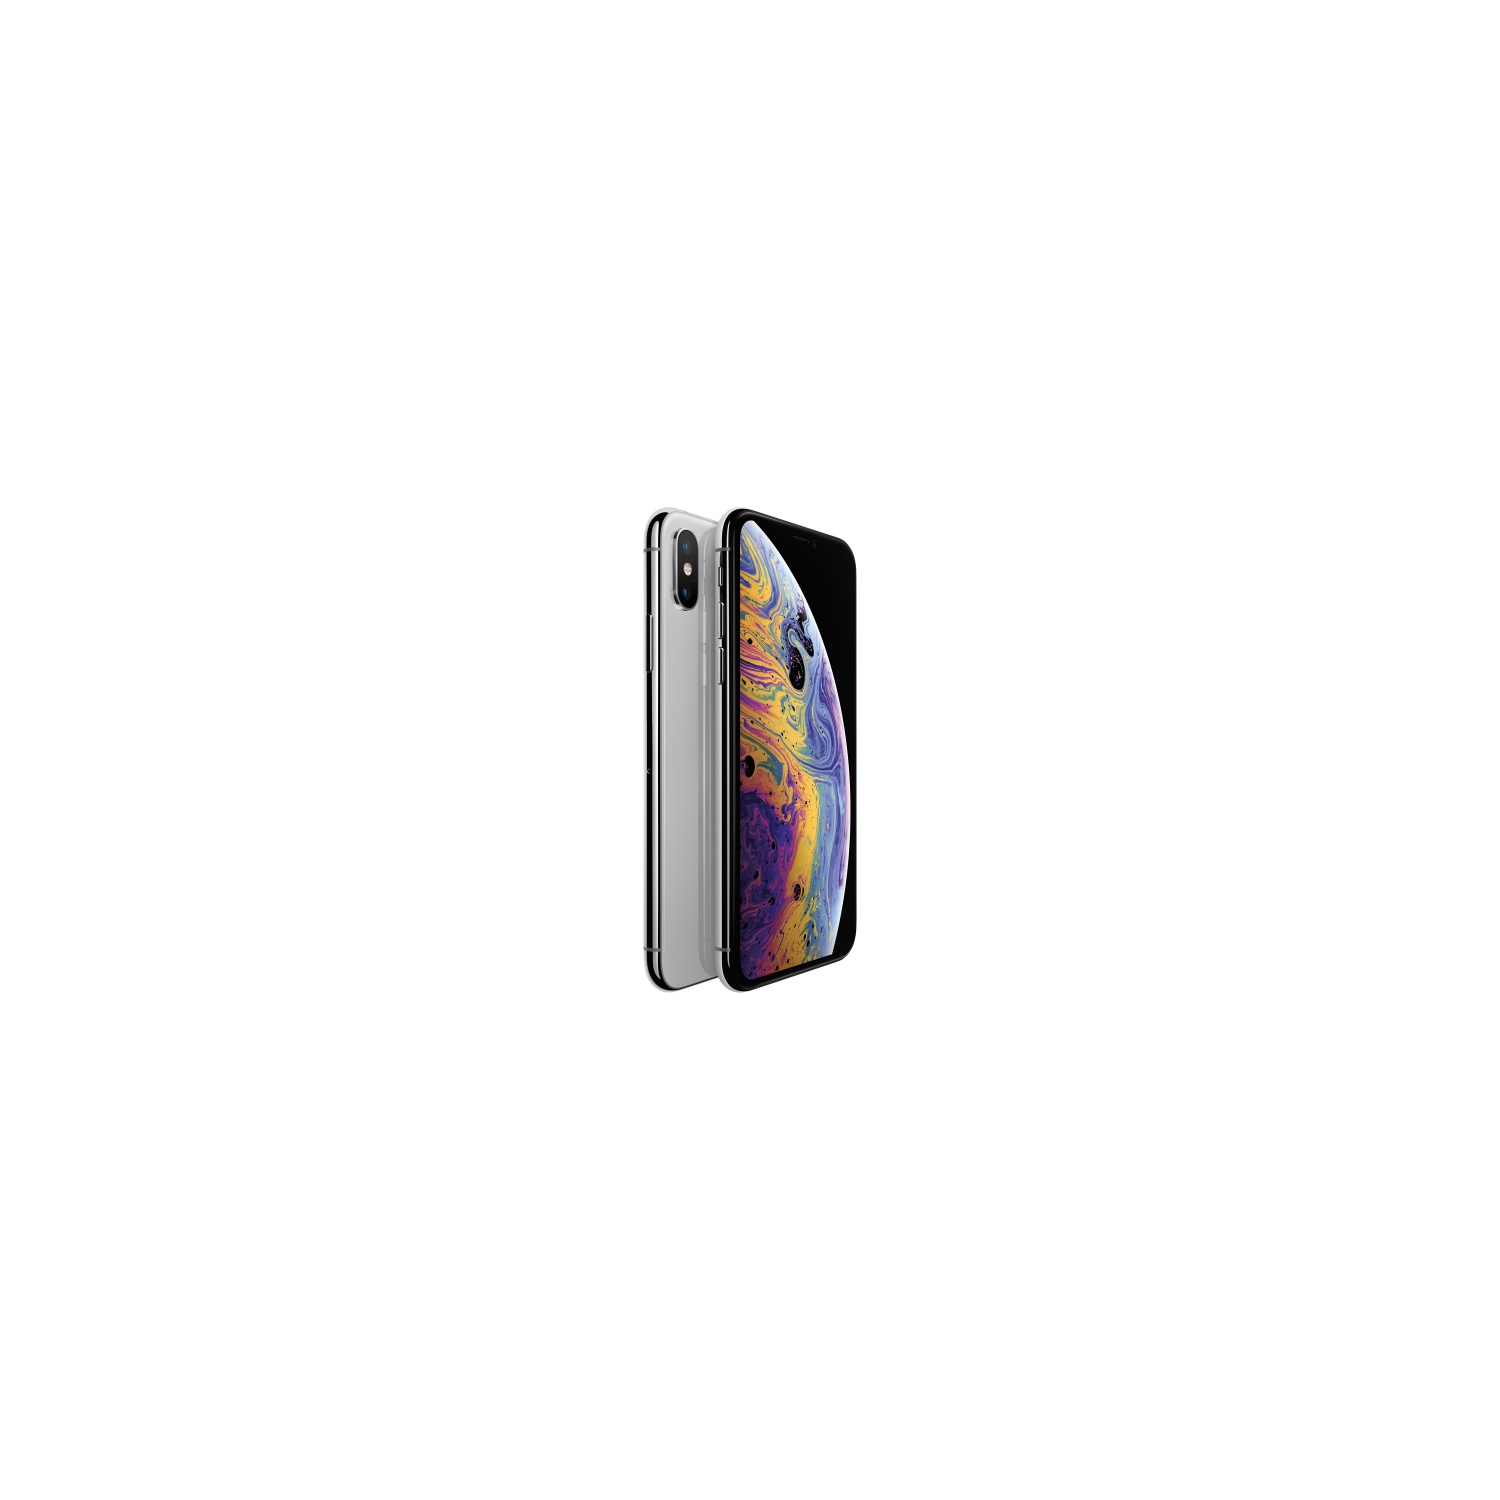 Apple iPhone XS 64GB - Silver - Unlocked